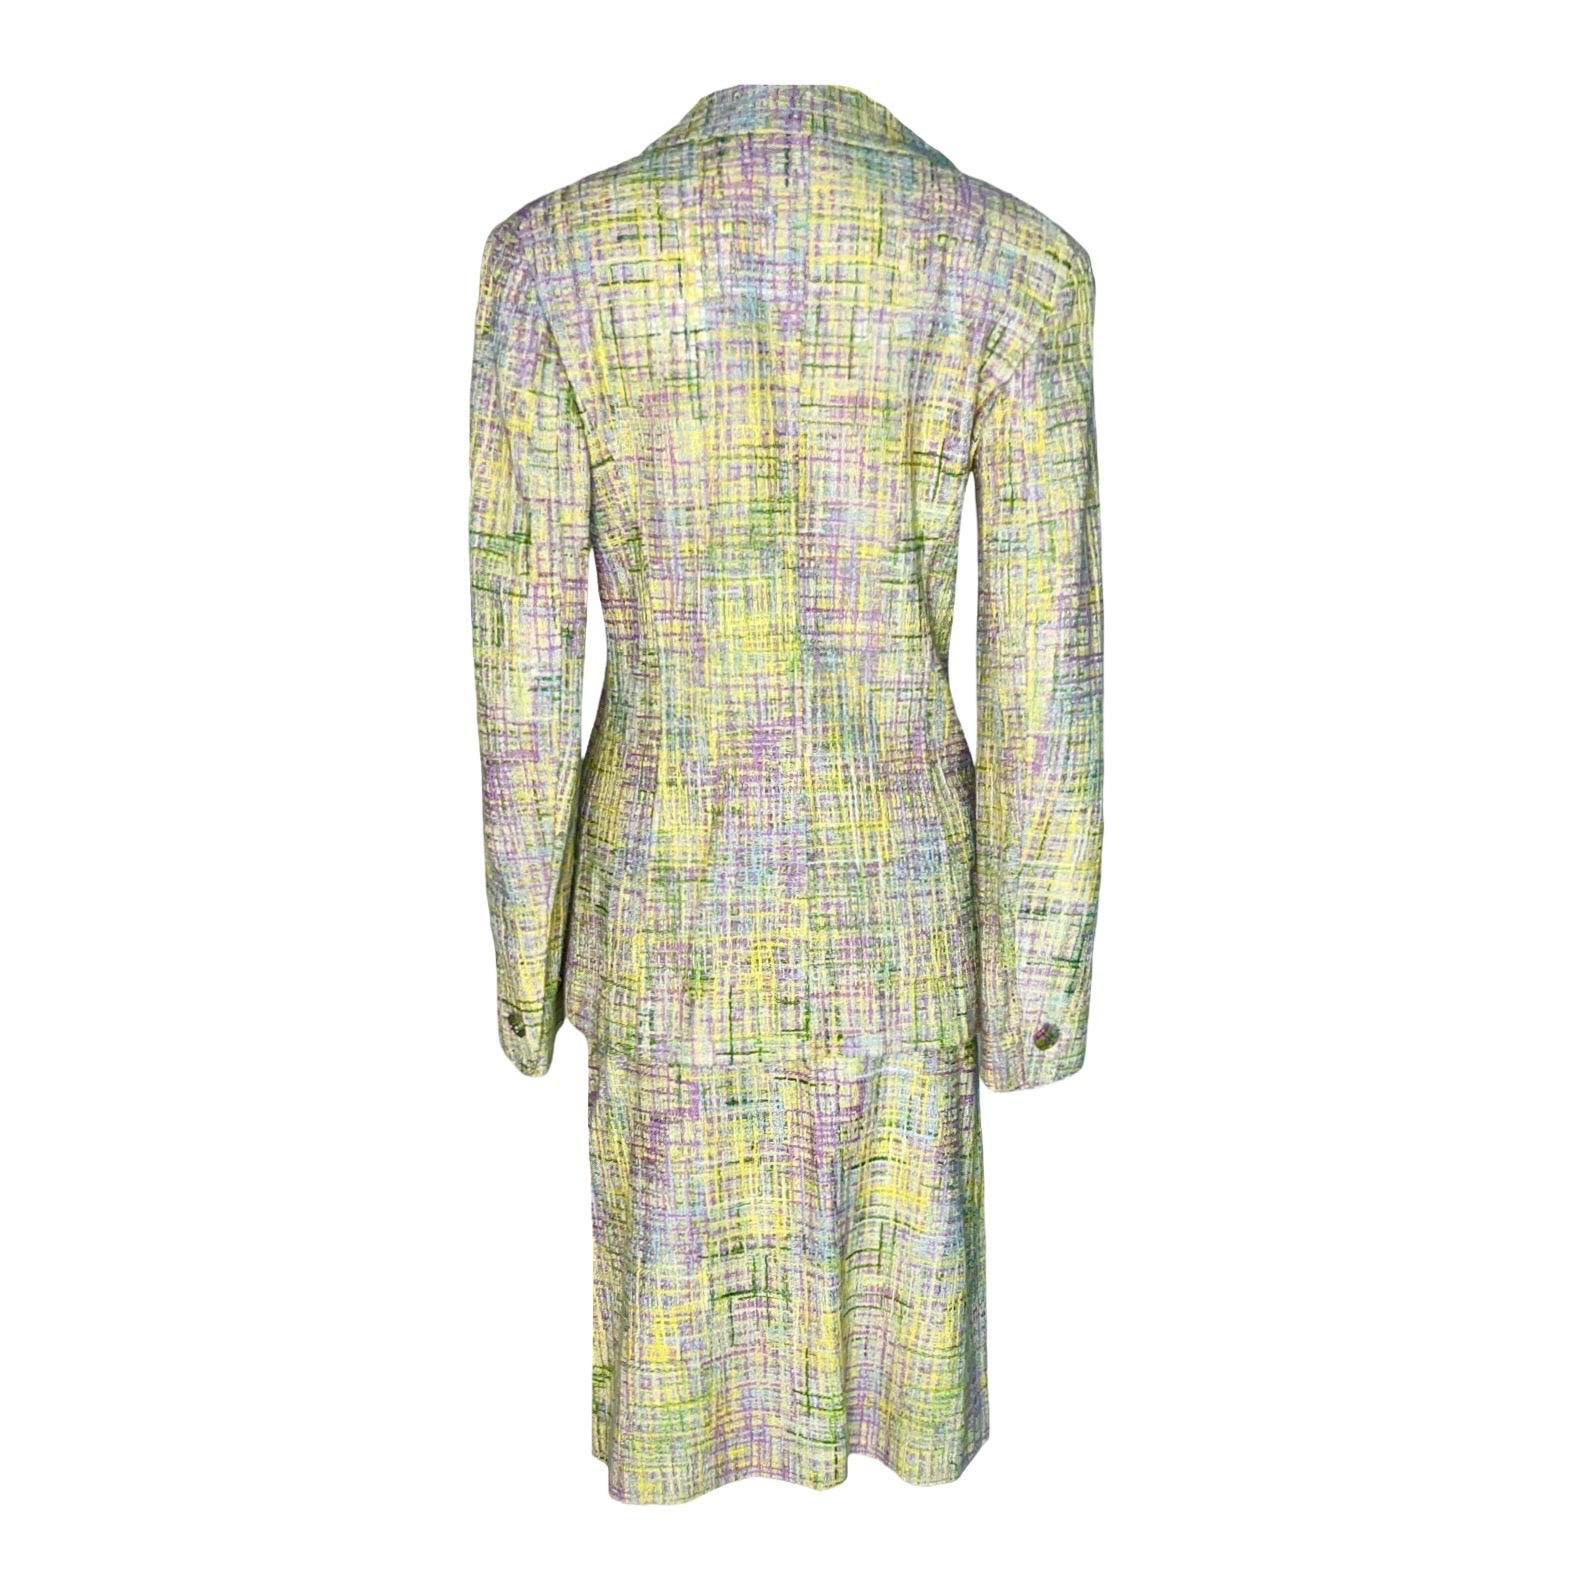 Beige CHANEL 1998 Tweed Dress Jacket Skirt Suit Ensemble Set - 3 PCS as seen on Kate For Sale